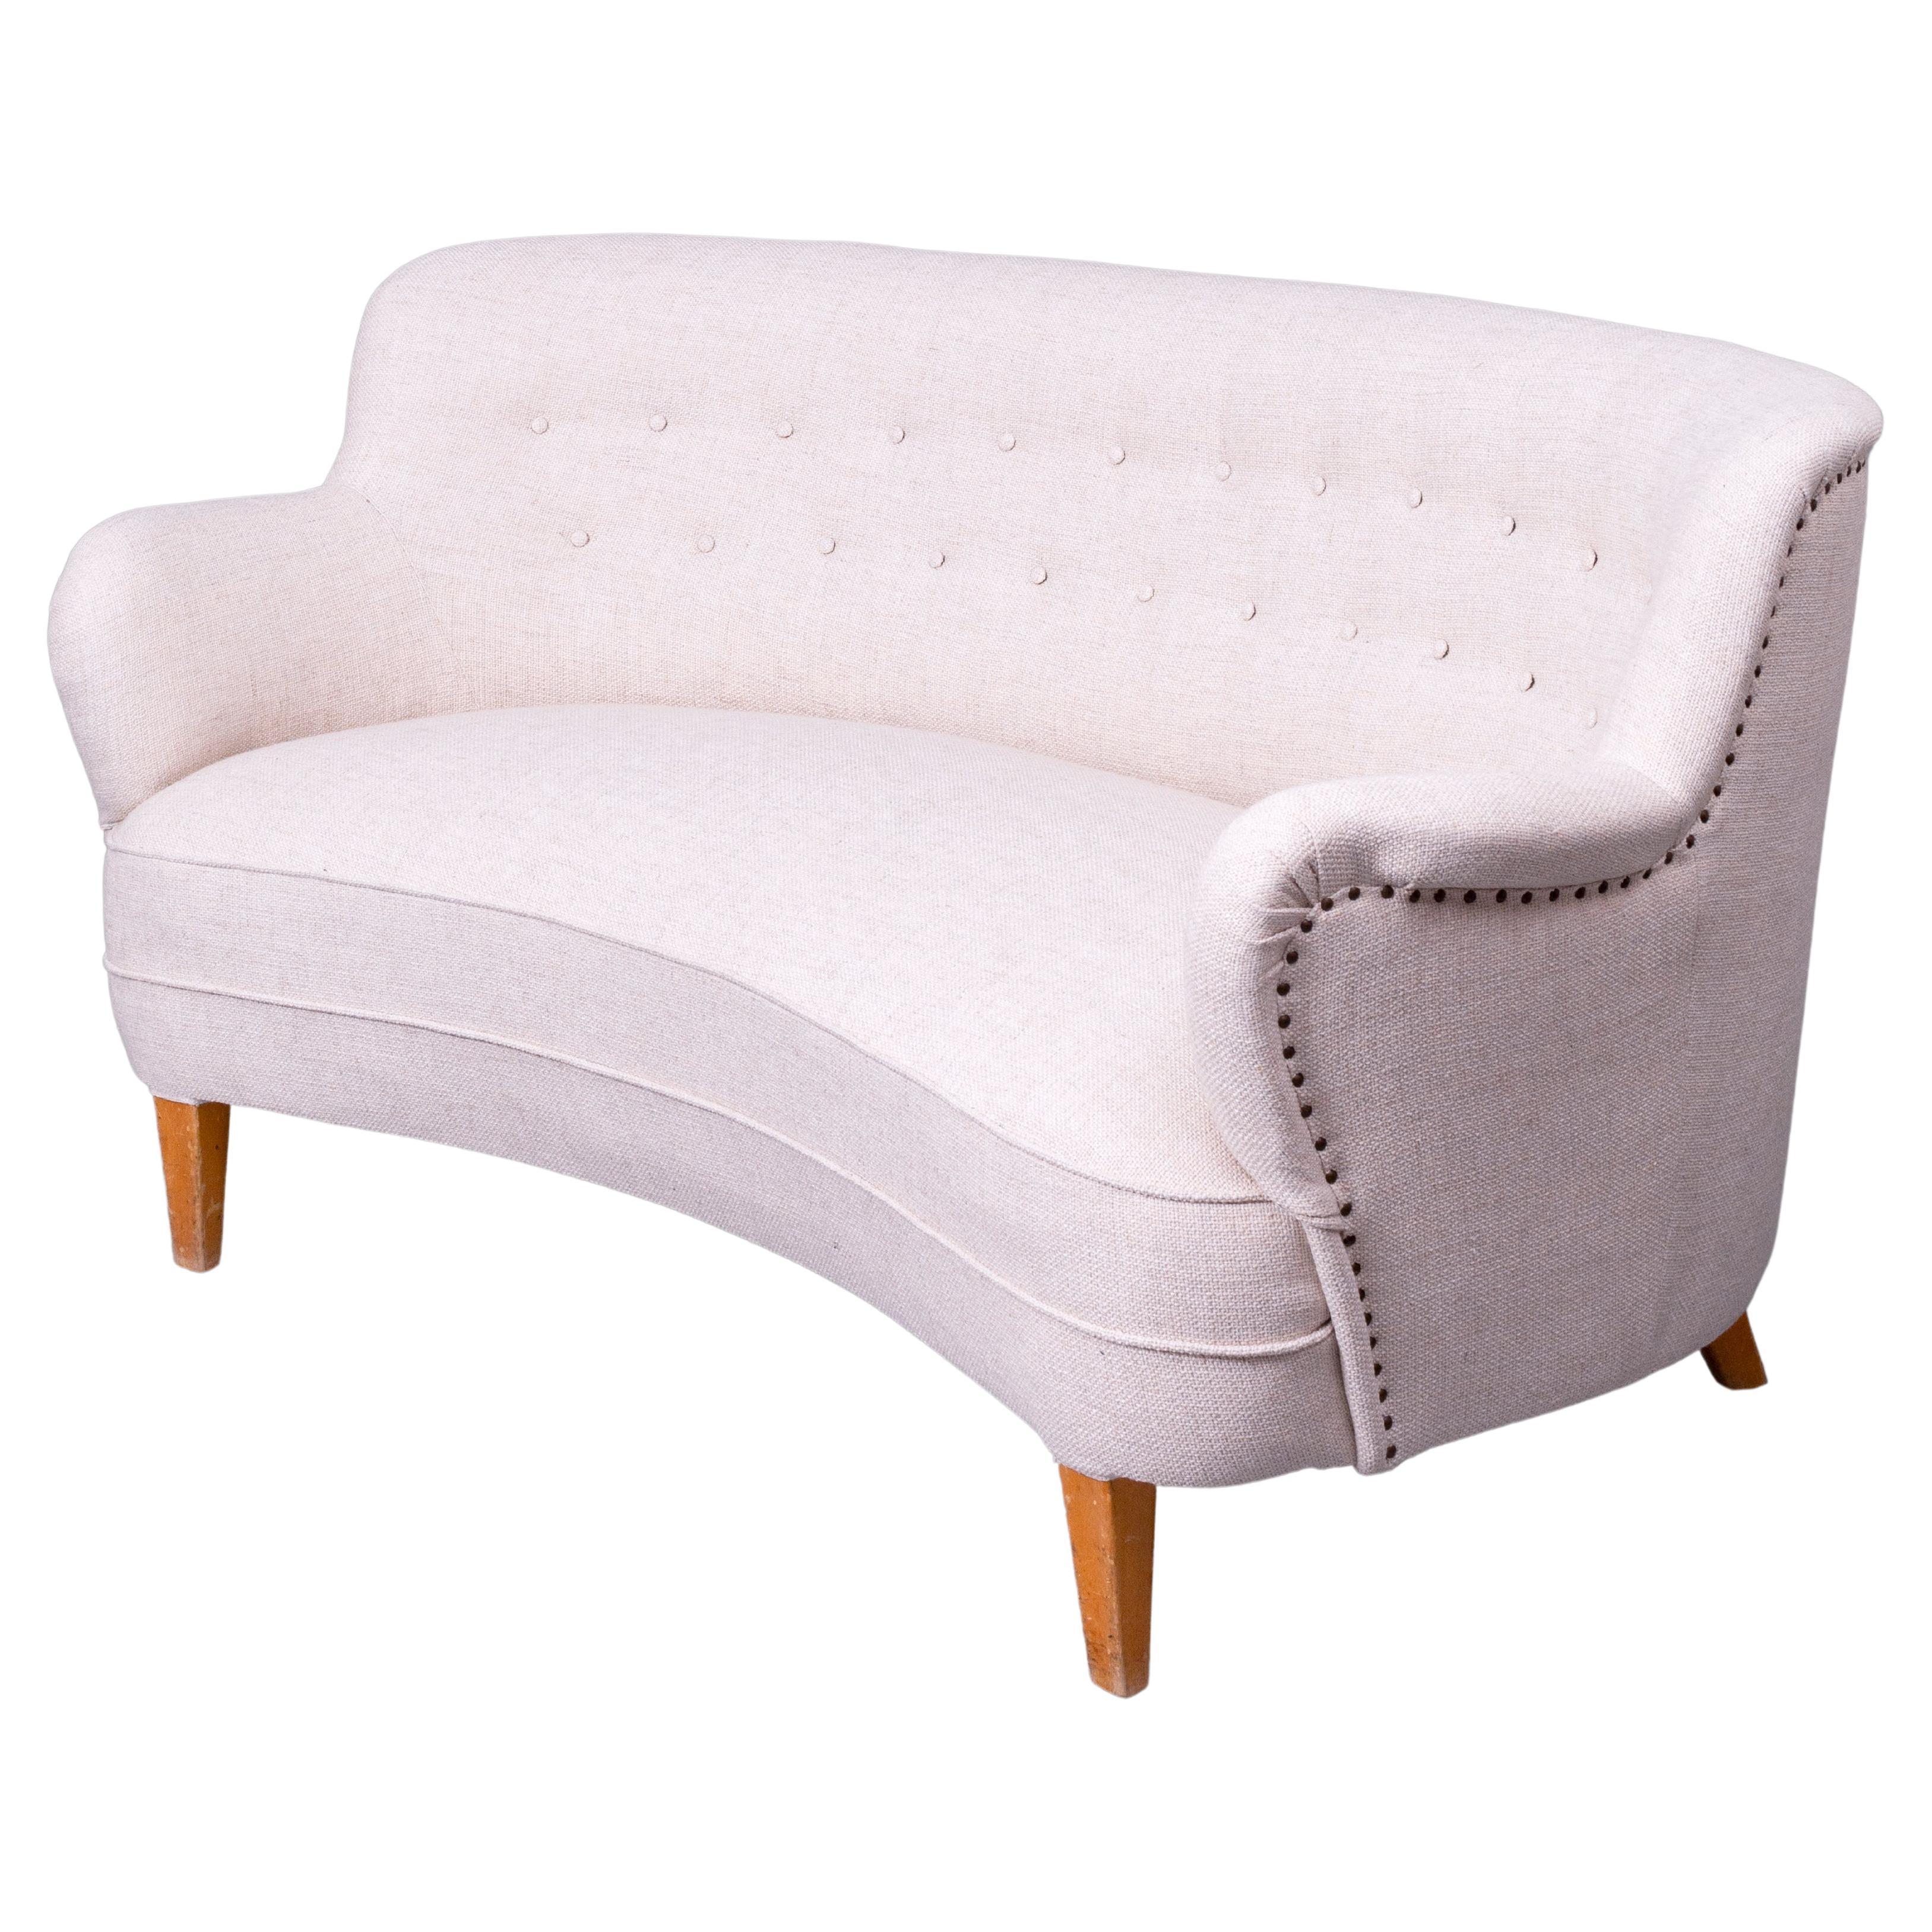 Scandinavian Modern Original "Samsas rund" Sofa by Carl Malmsten For Sale